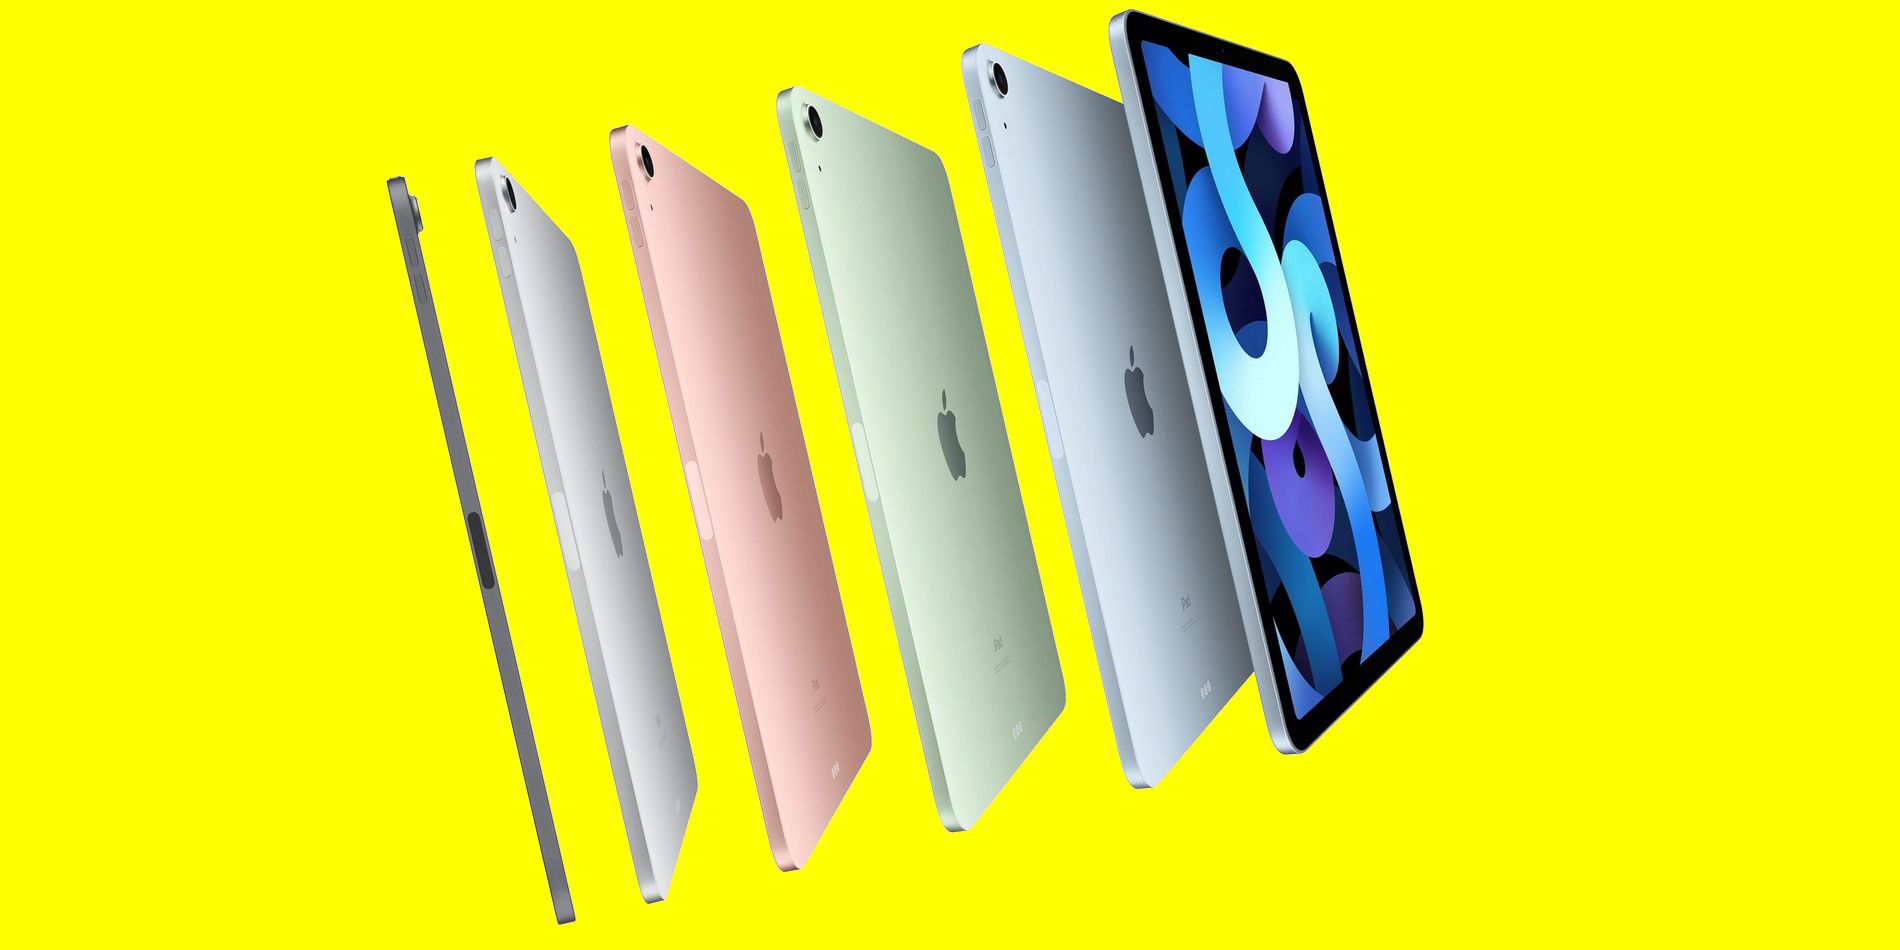 iPad Air 5 Rumors Indicate Significant 5G And Camera Upgrades